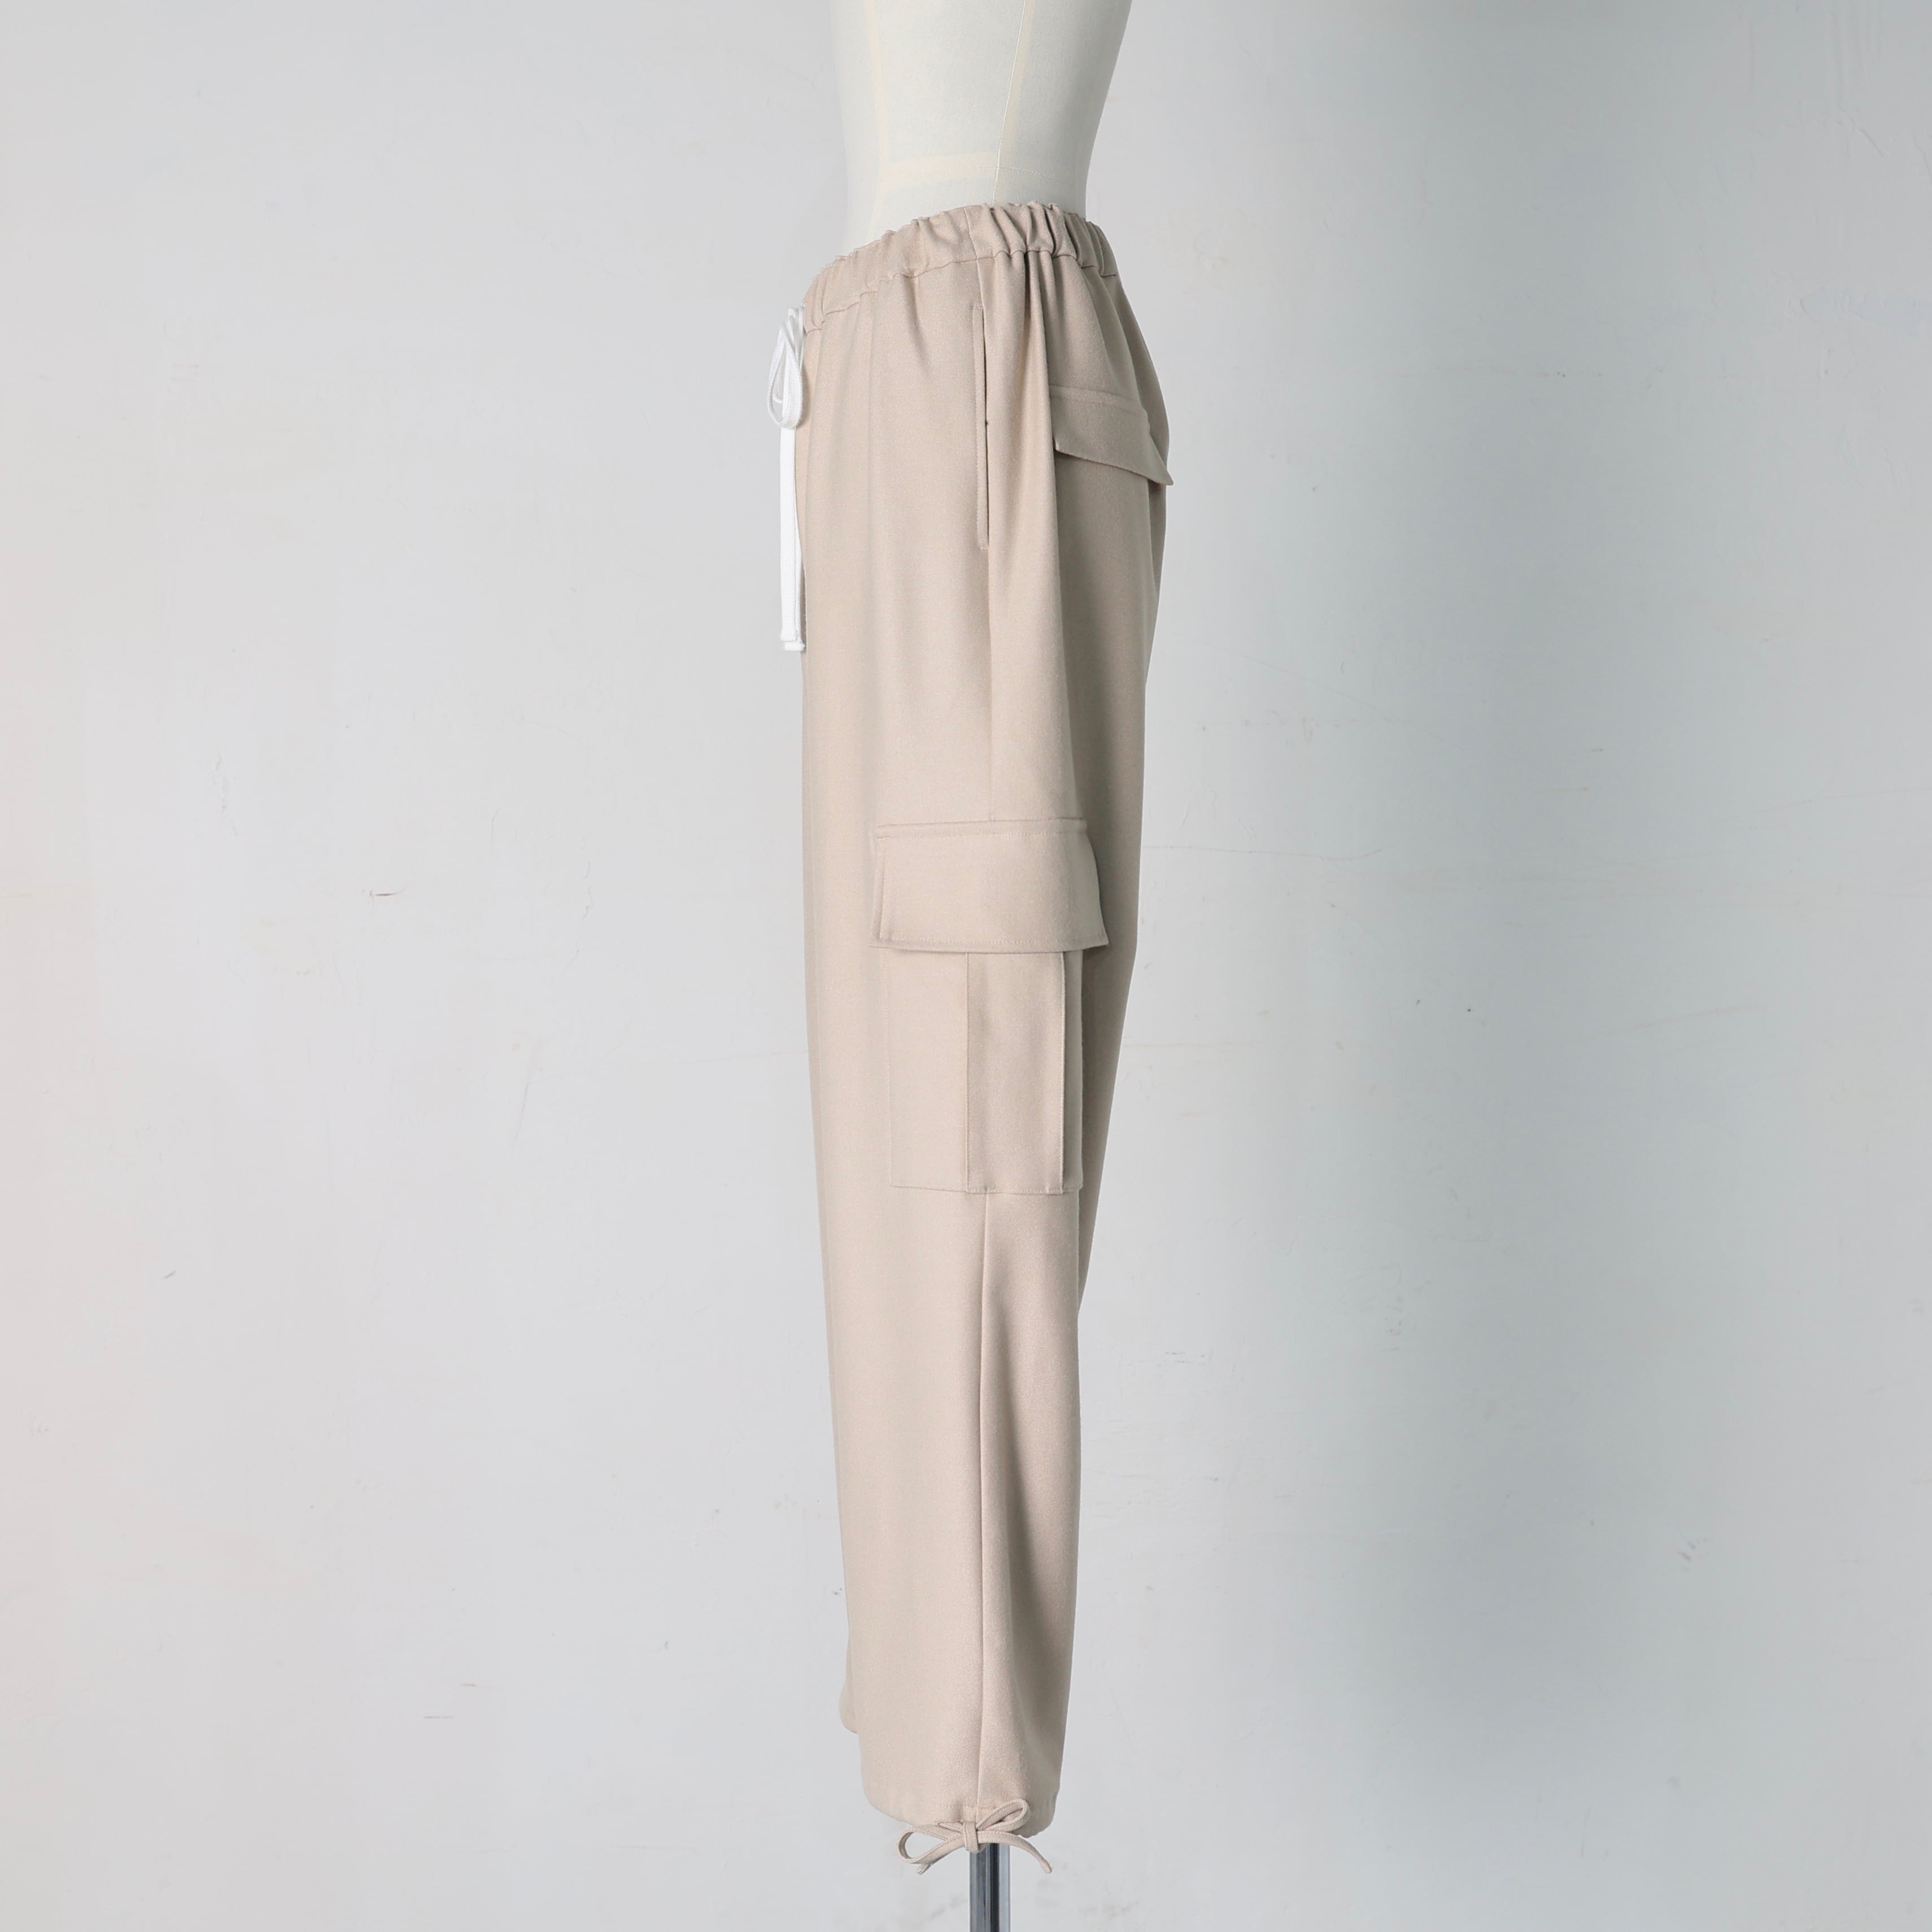 gypsohila GP-226 AW Fleuri Skirt